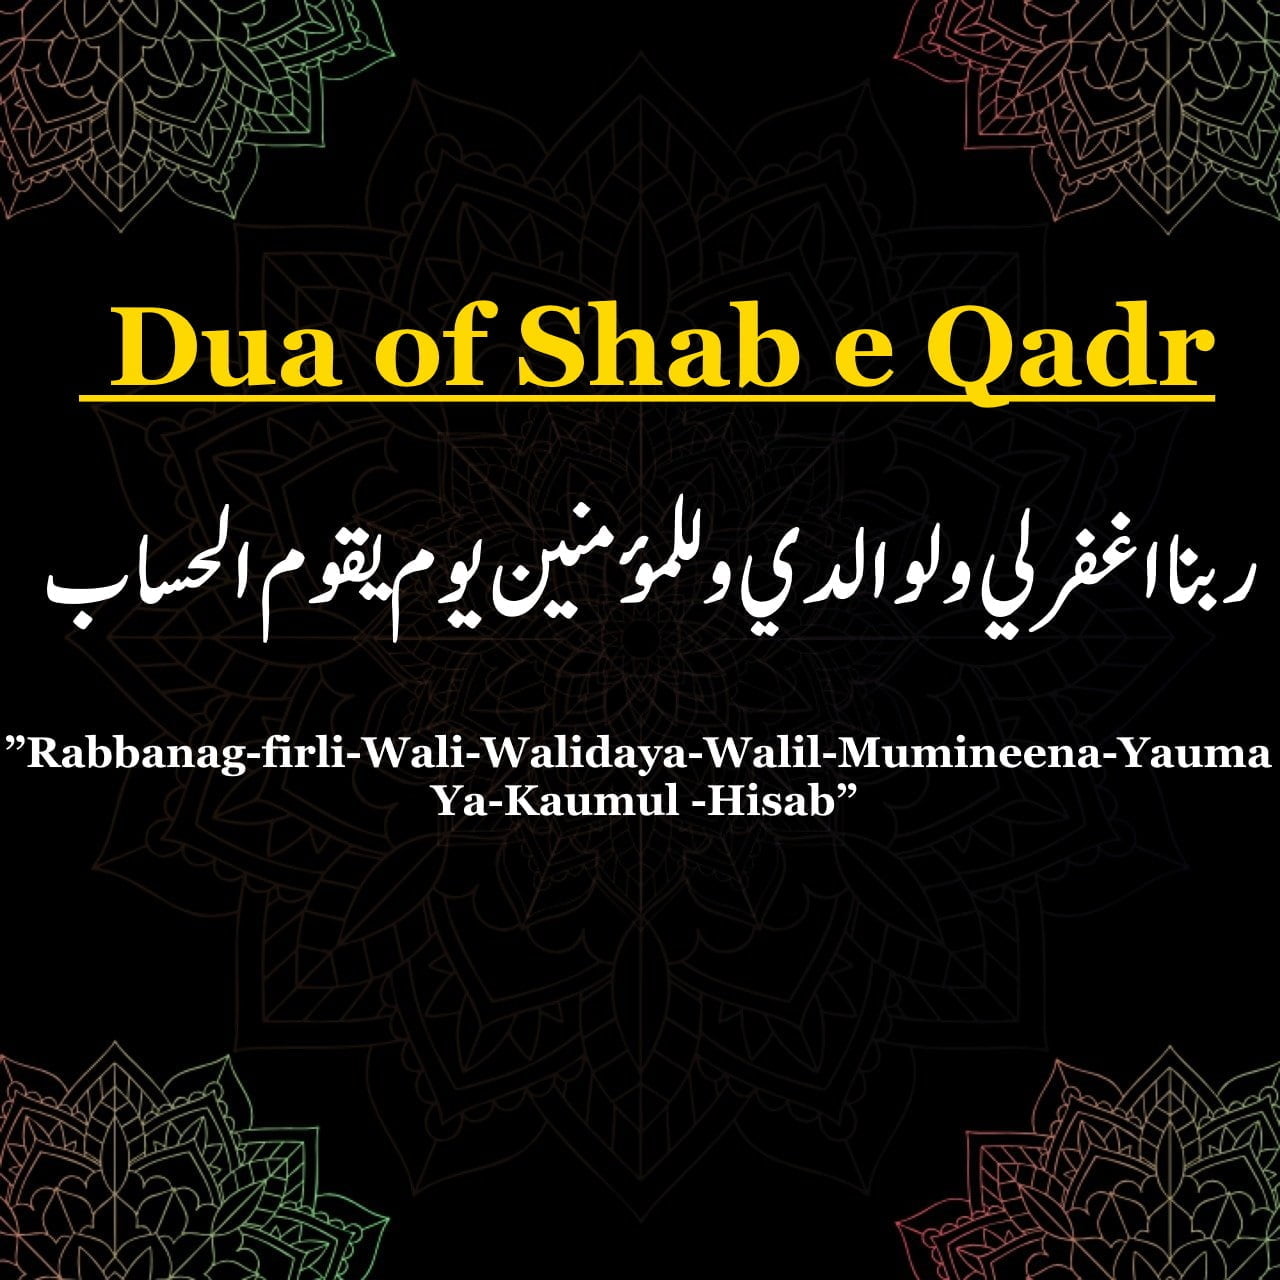  Dua of Shab e Qadr in Urdu English